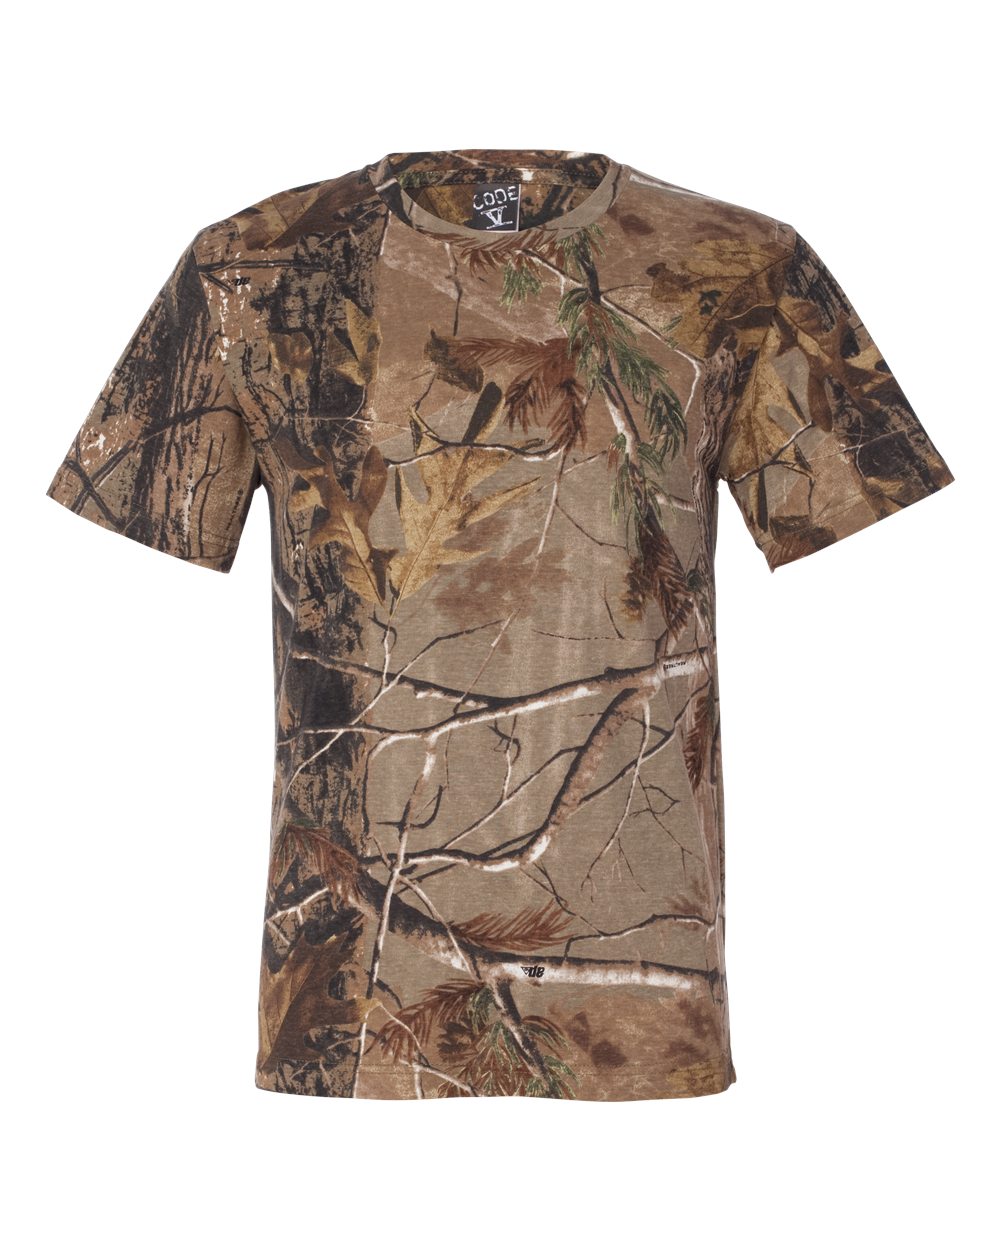 Code Five 3981 - Realtree® Camo Long Sleeve T-Shirt